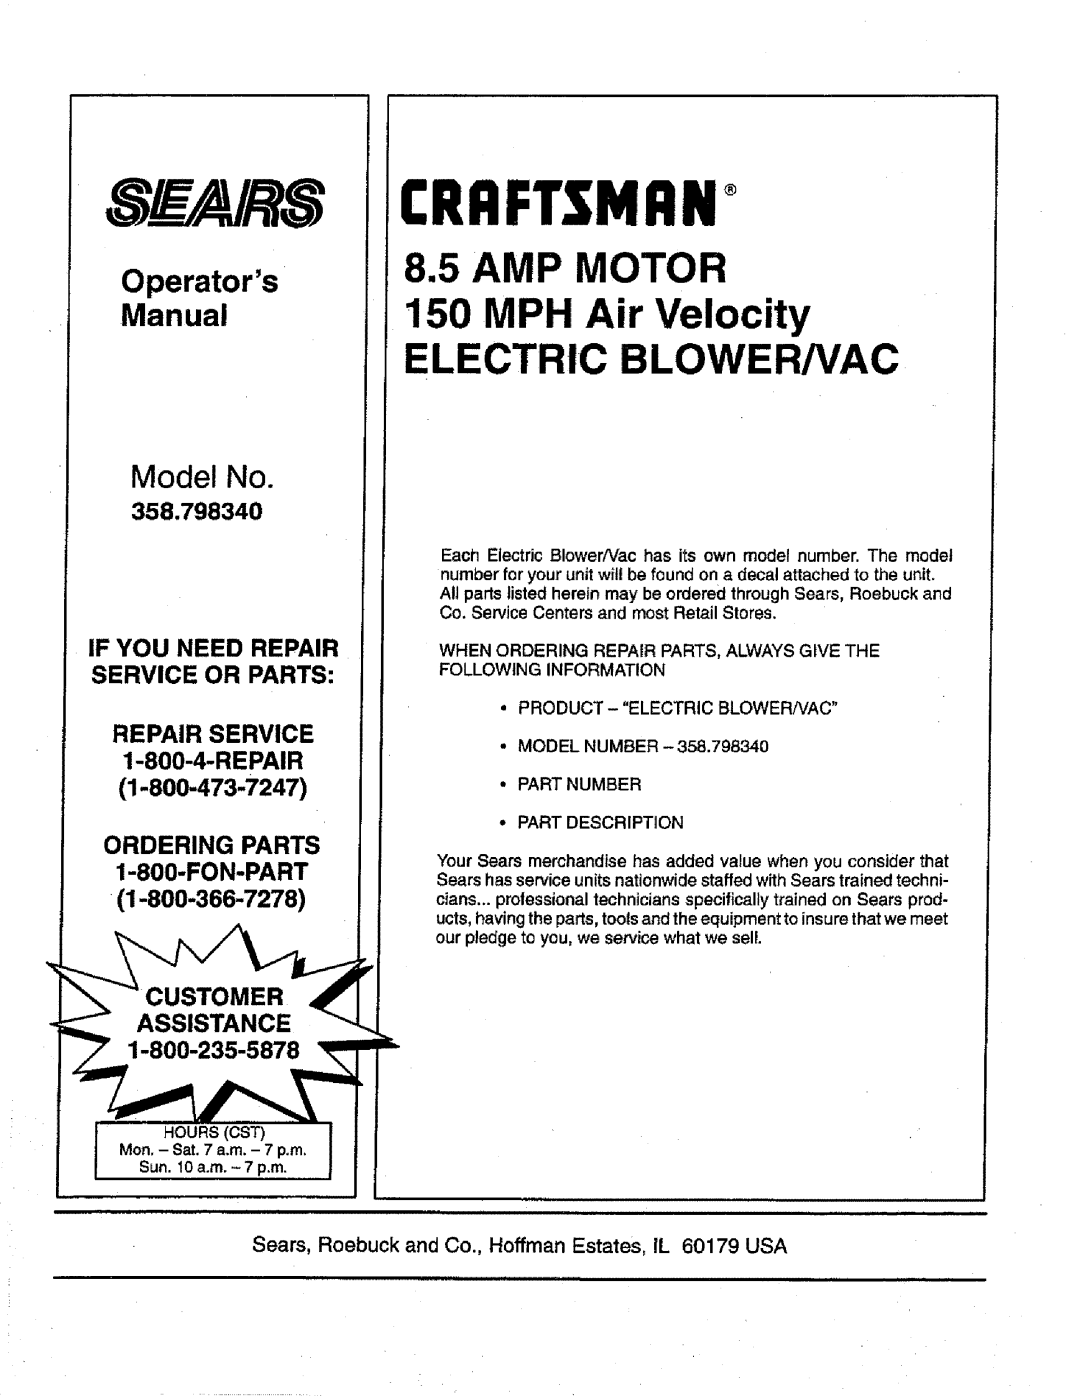 Craftsman 79834 CRRFTSMRNo, AMP MOTOR 150 MPH Air Velocity, Electric Blower/Vac, Operators Manual, Assistance, Model No 